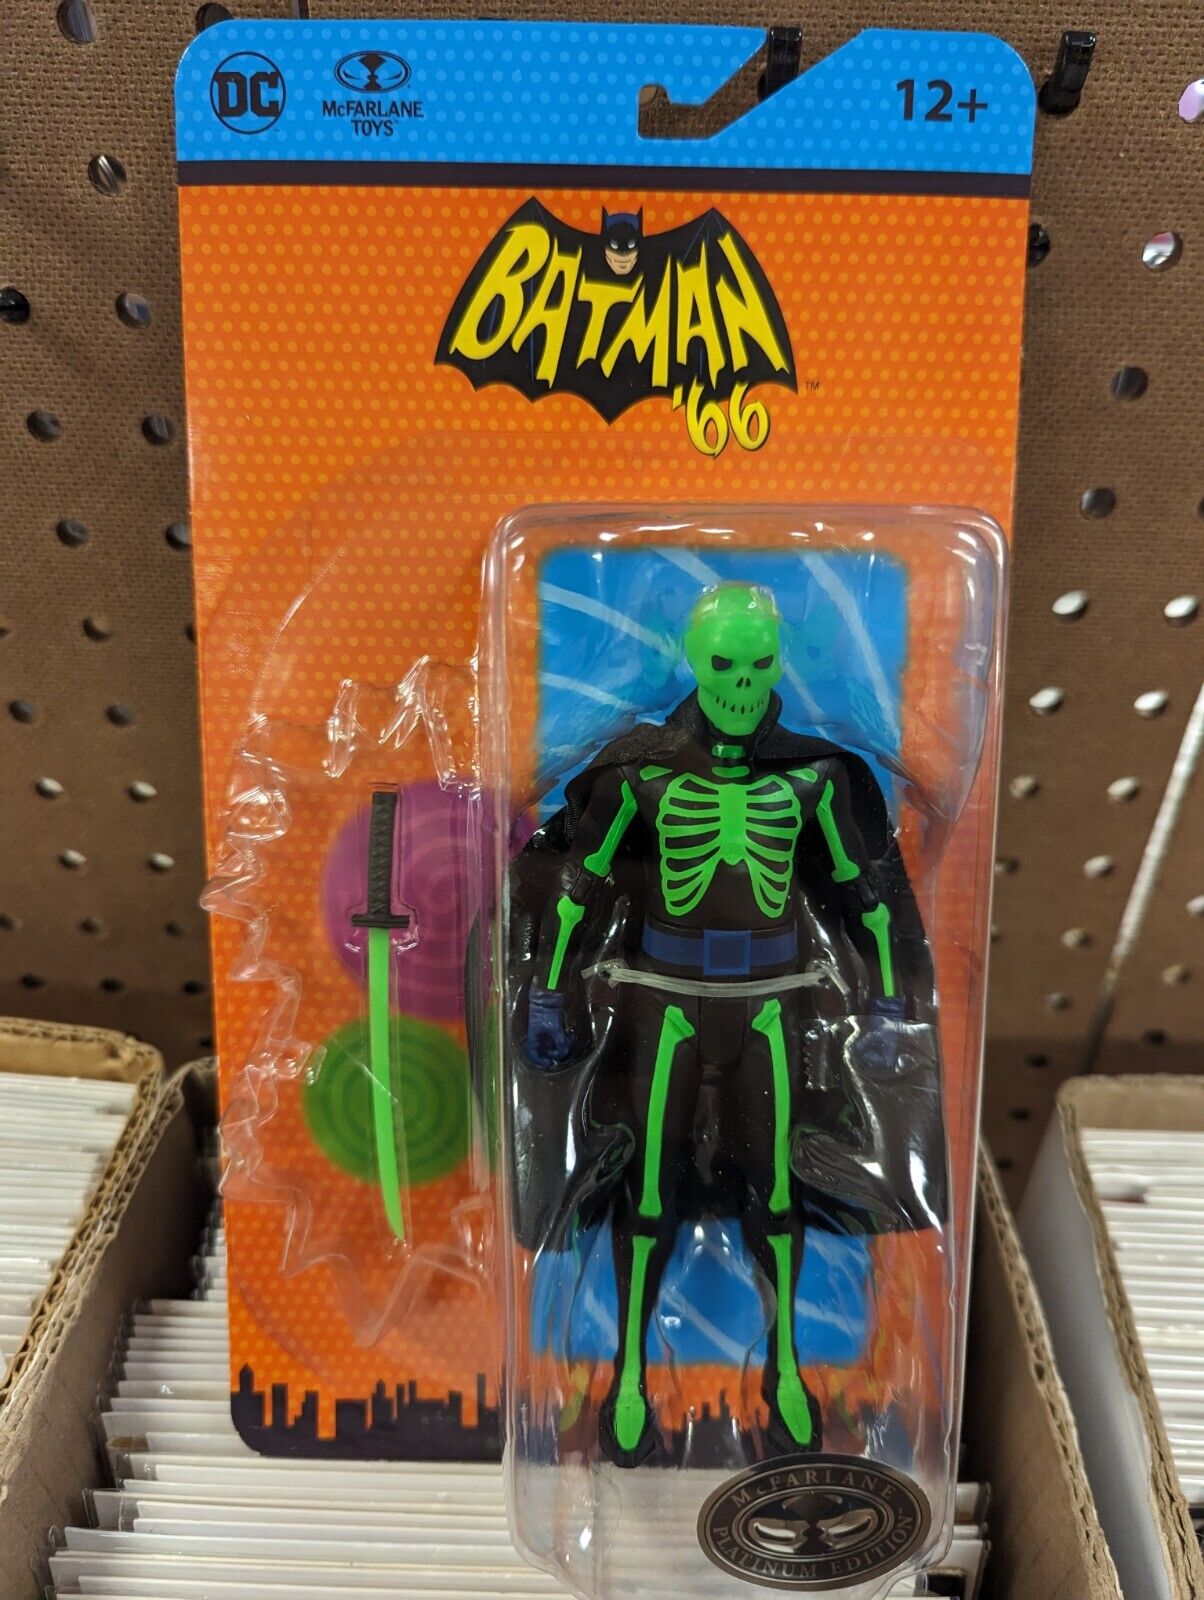 Batman 66 Retro Classics Lord Death Man Platinum Edition McFarlane Toys